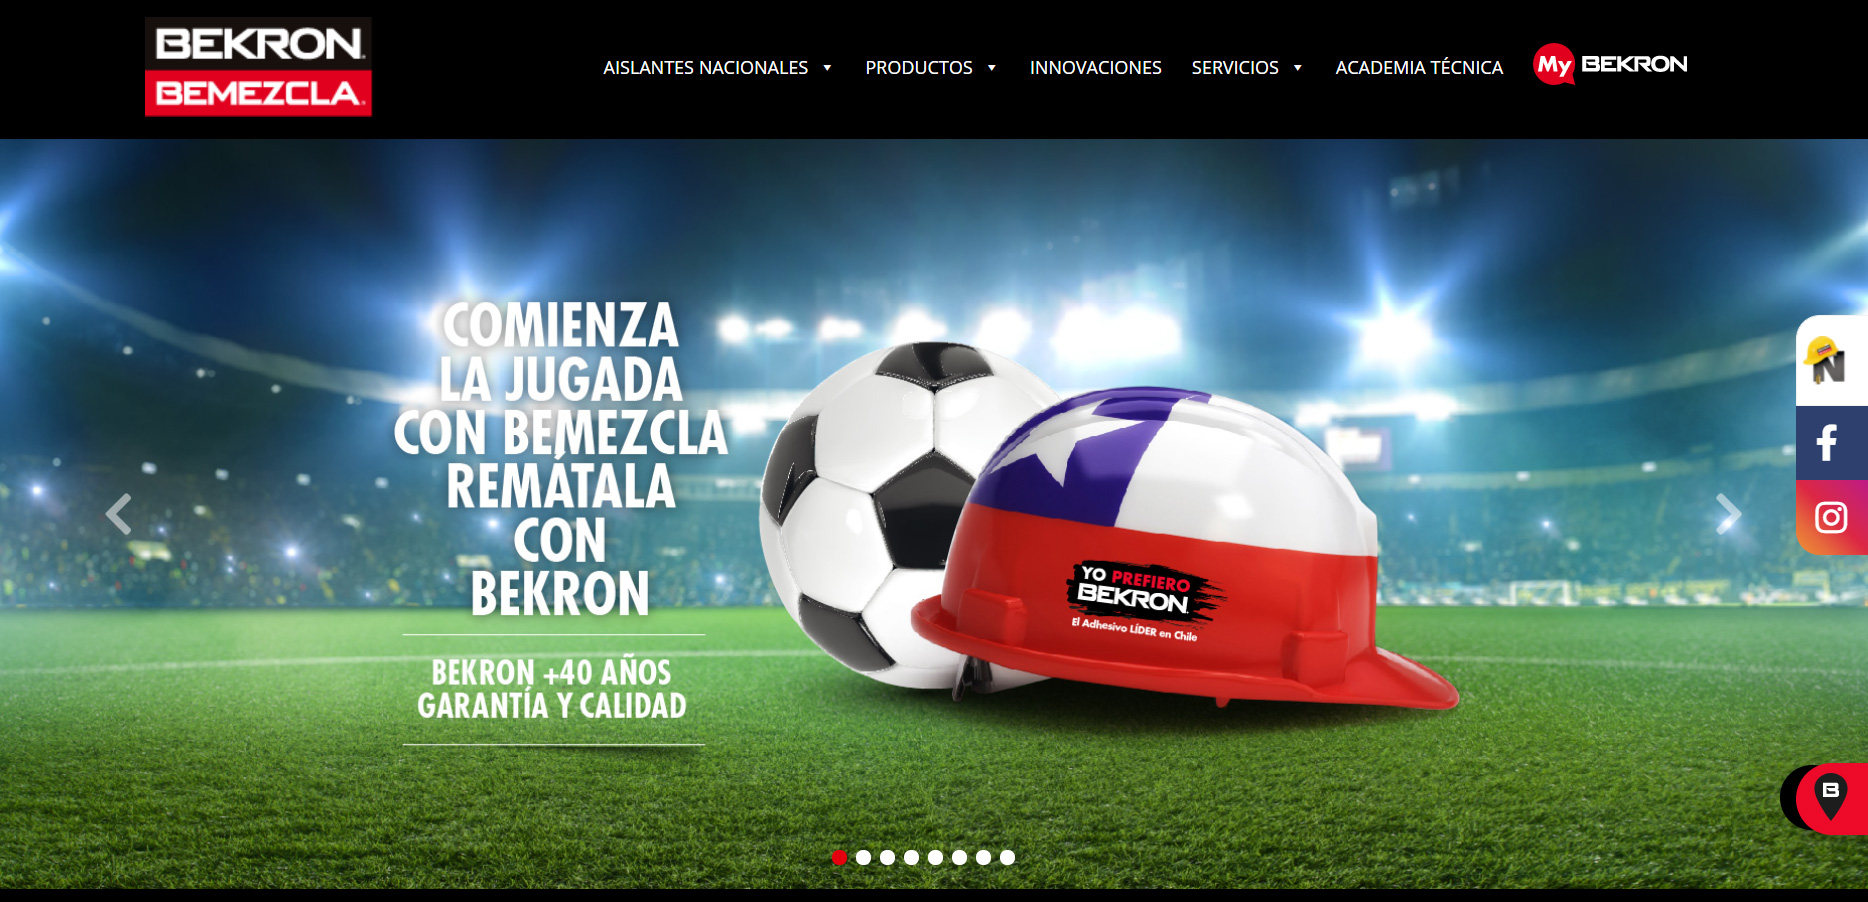 Henkel Chile Bekron website